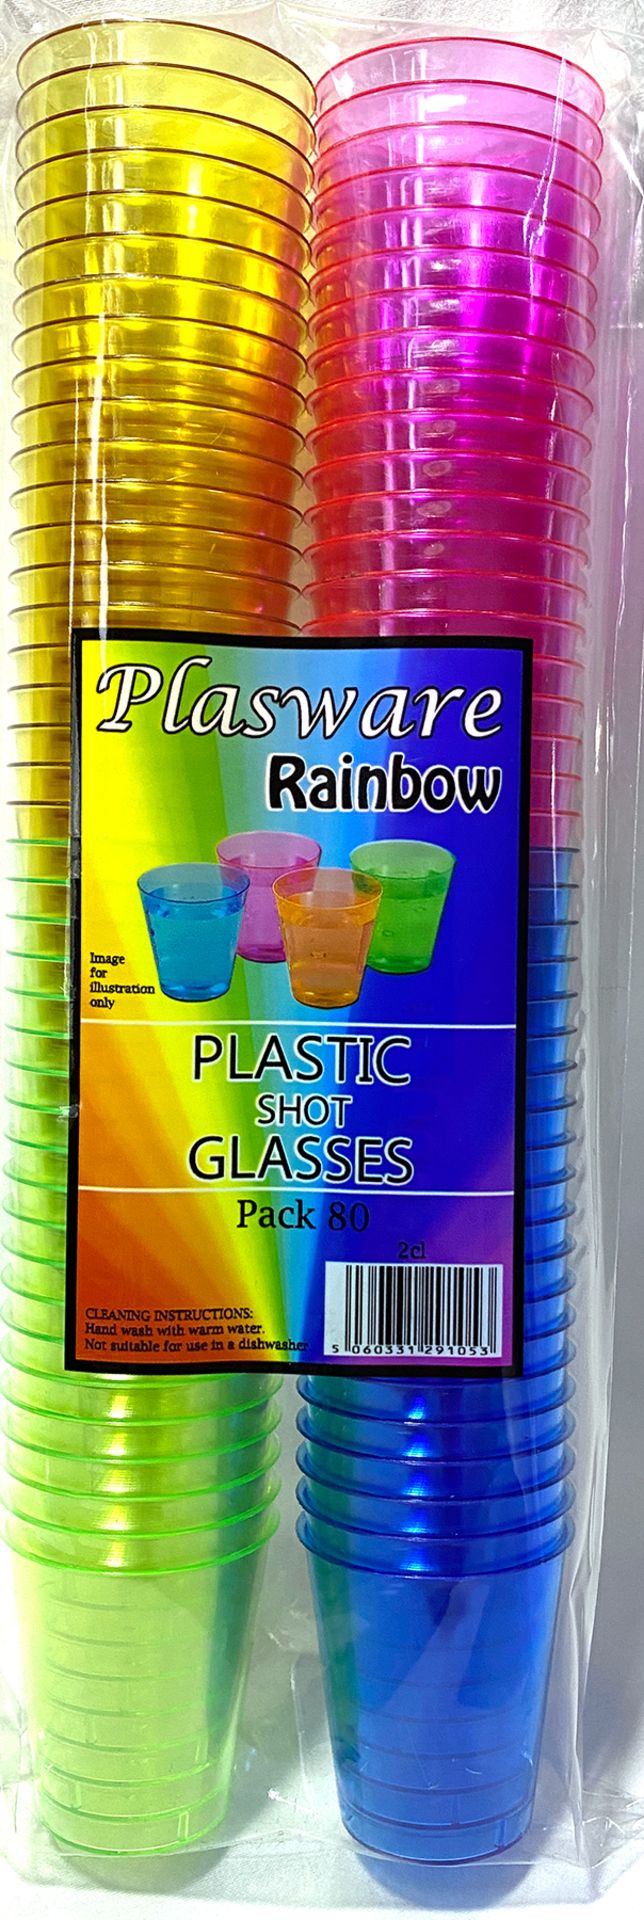 1 x Box of 1600 Rainbow Plastic Shot Glass by Plasware - Image 2 of 2